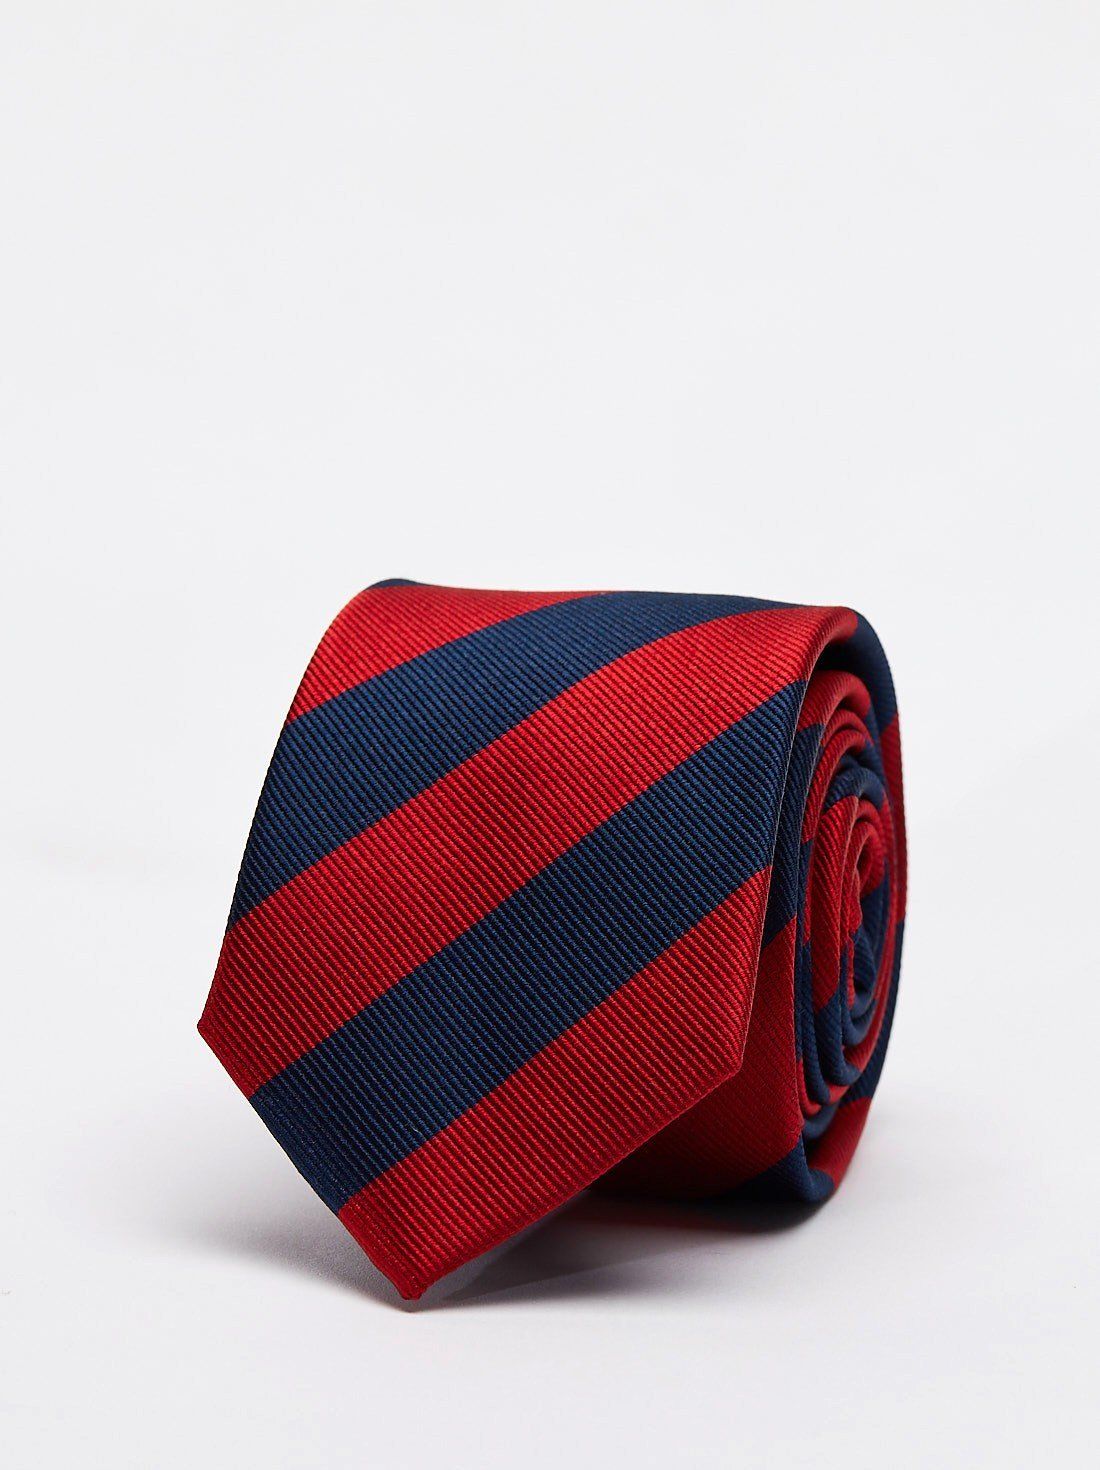 Red & Blue Tie Club 